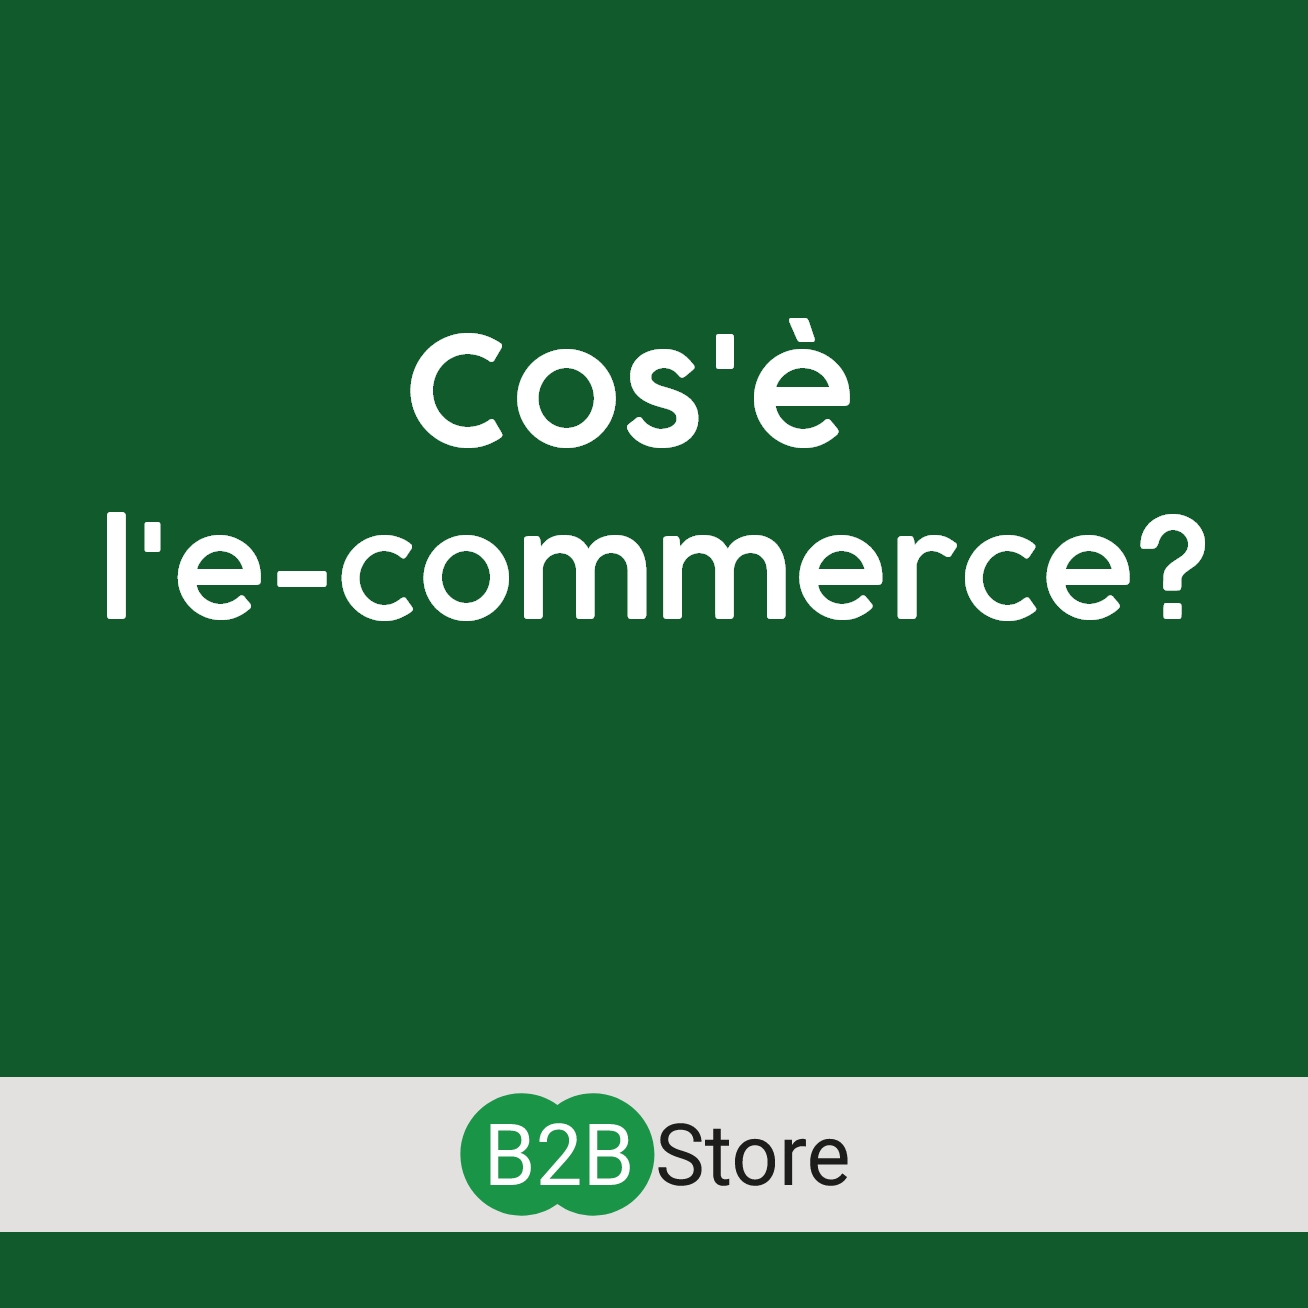 B2B Store Cos'è l'e-commerce?